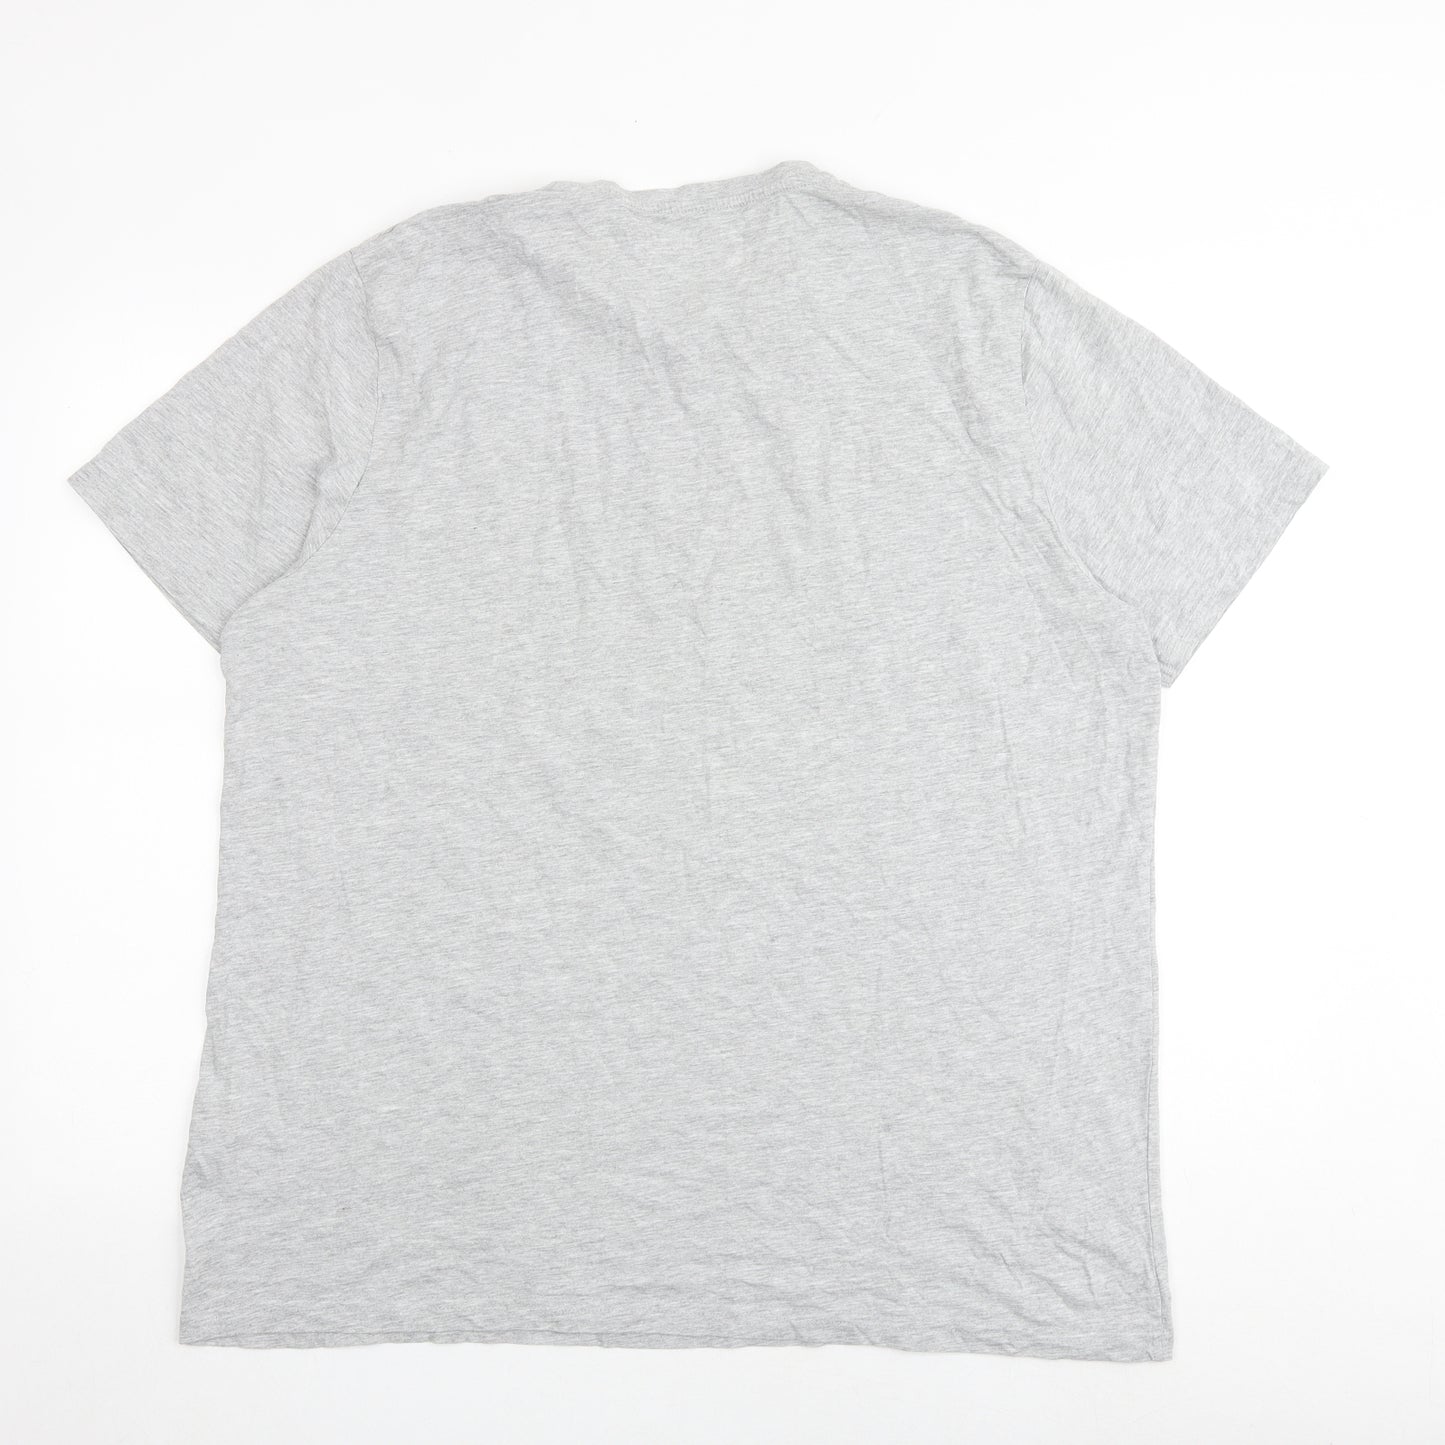 Dunnes Stores Mens Grey Cotton T-Shirt Size 2XL Round Neck